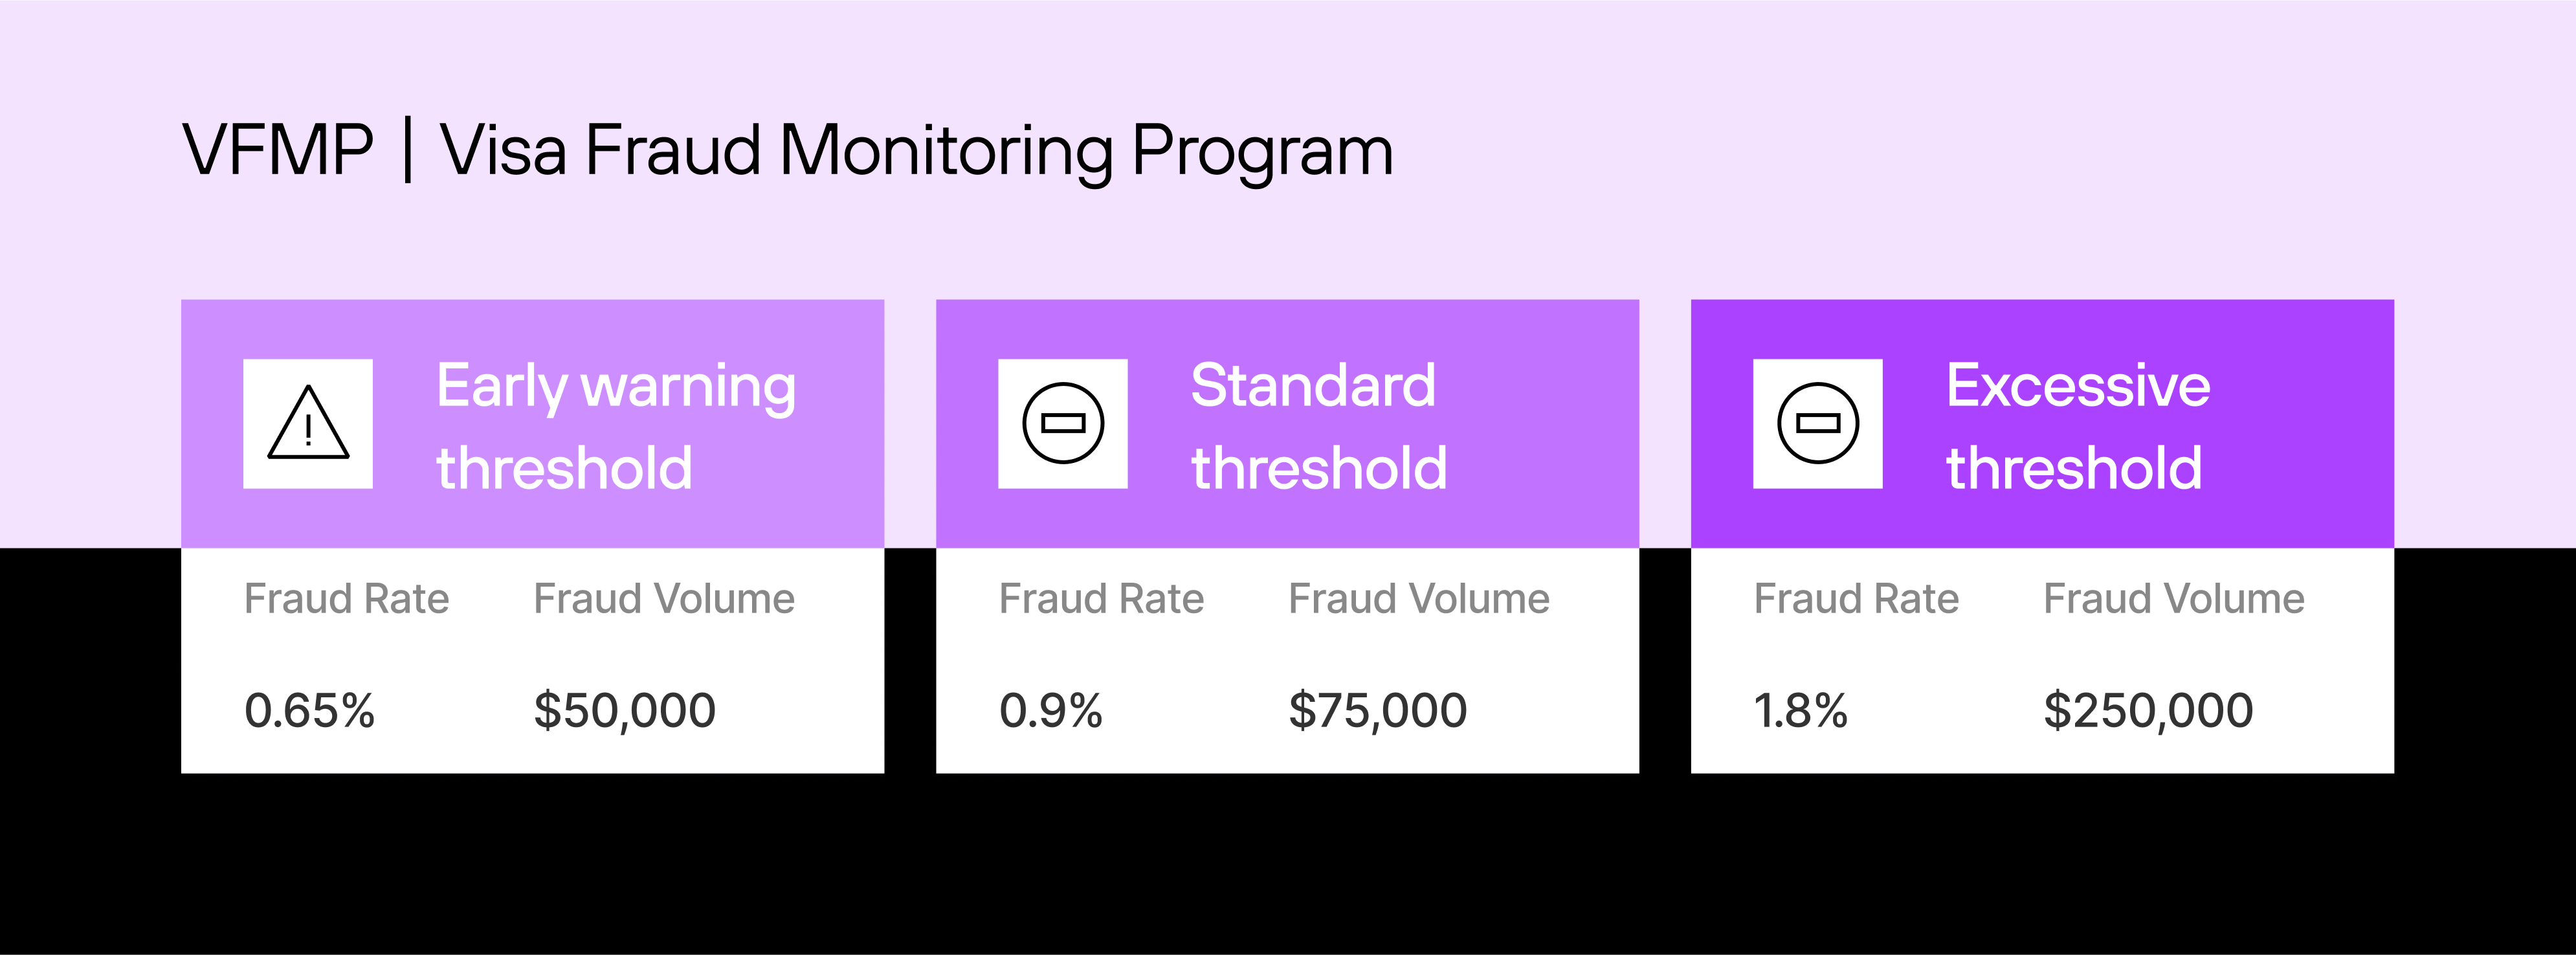 visa fraud monitoring program thresholds